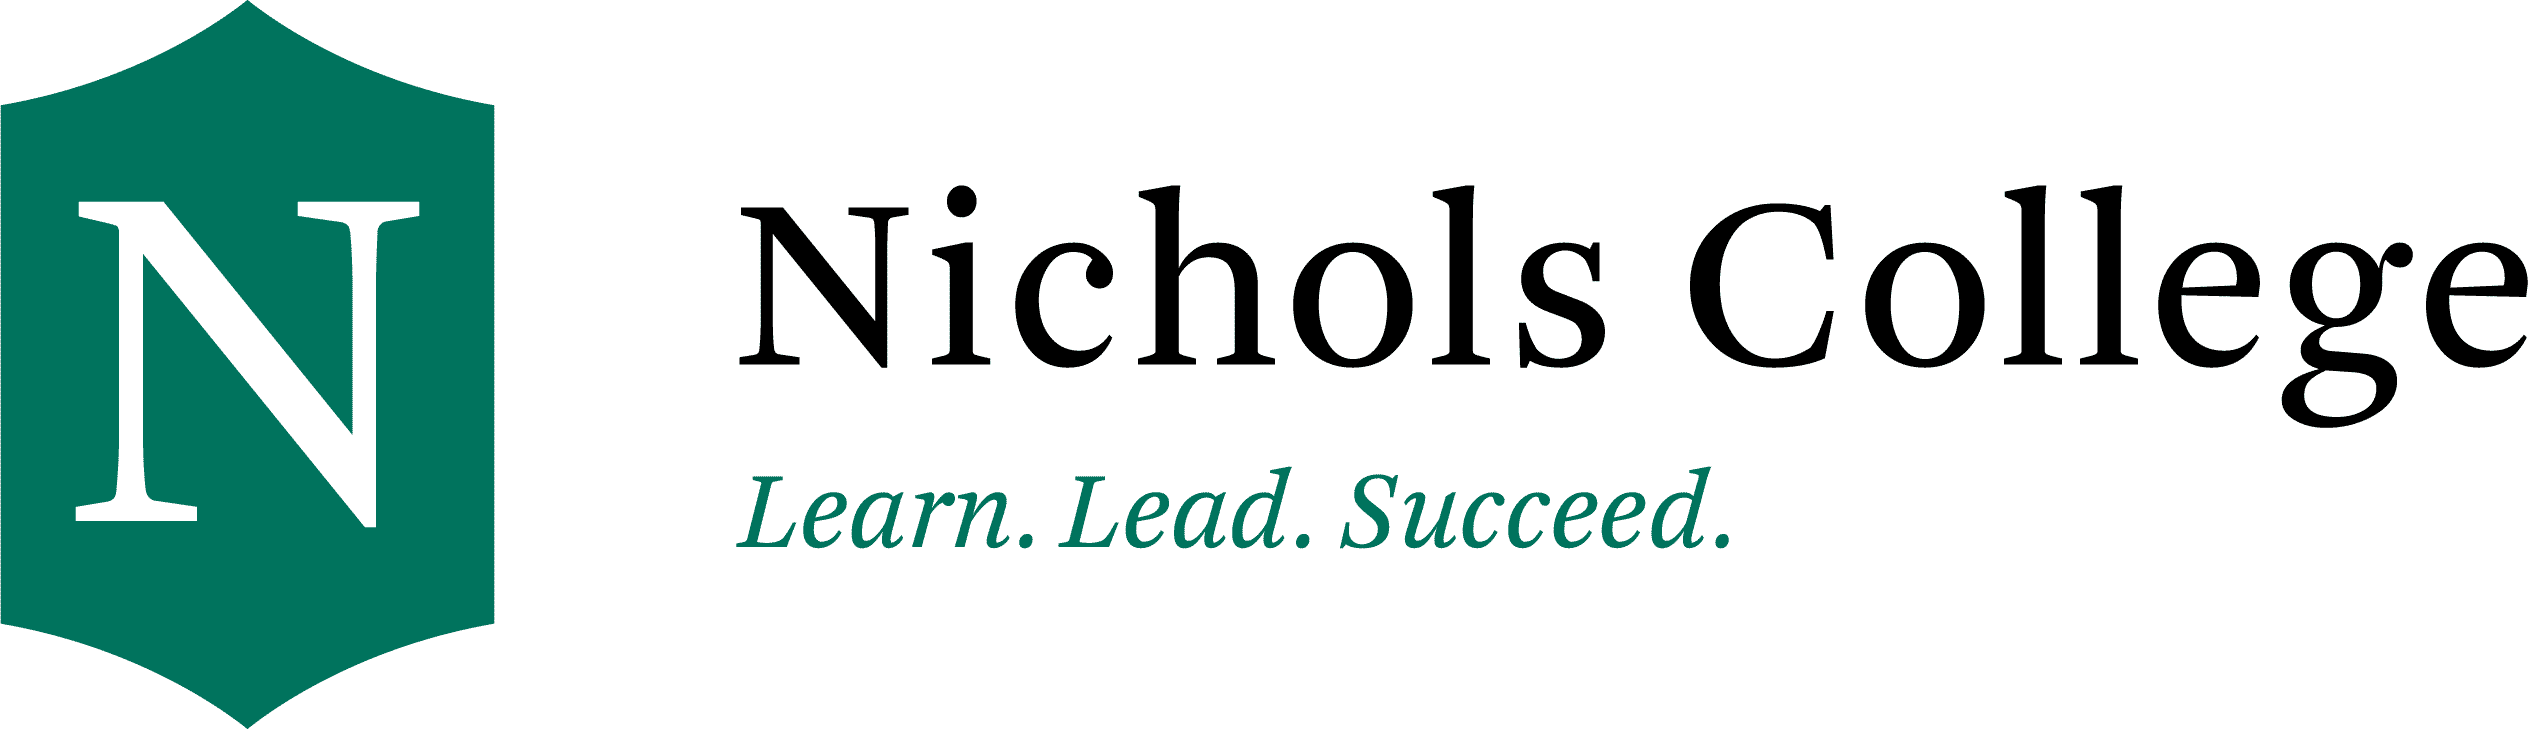 Logos Nichols College